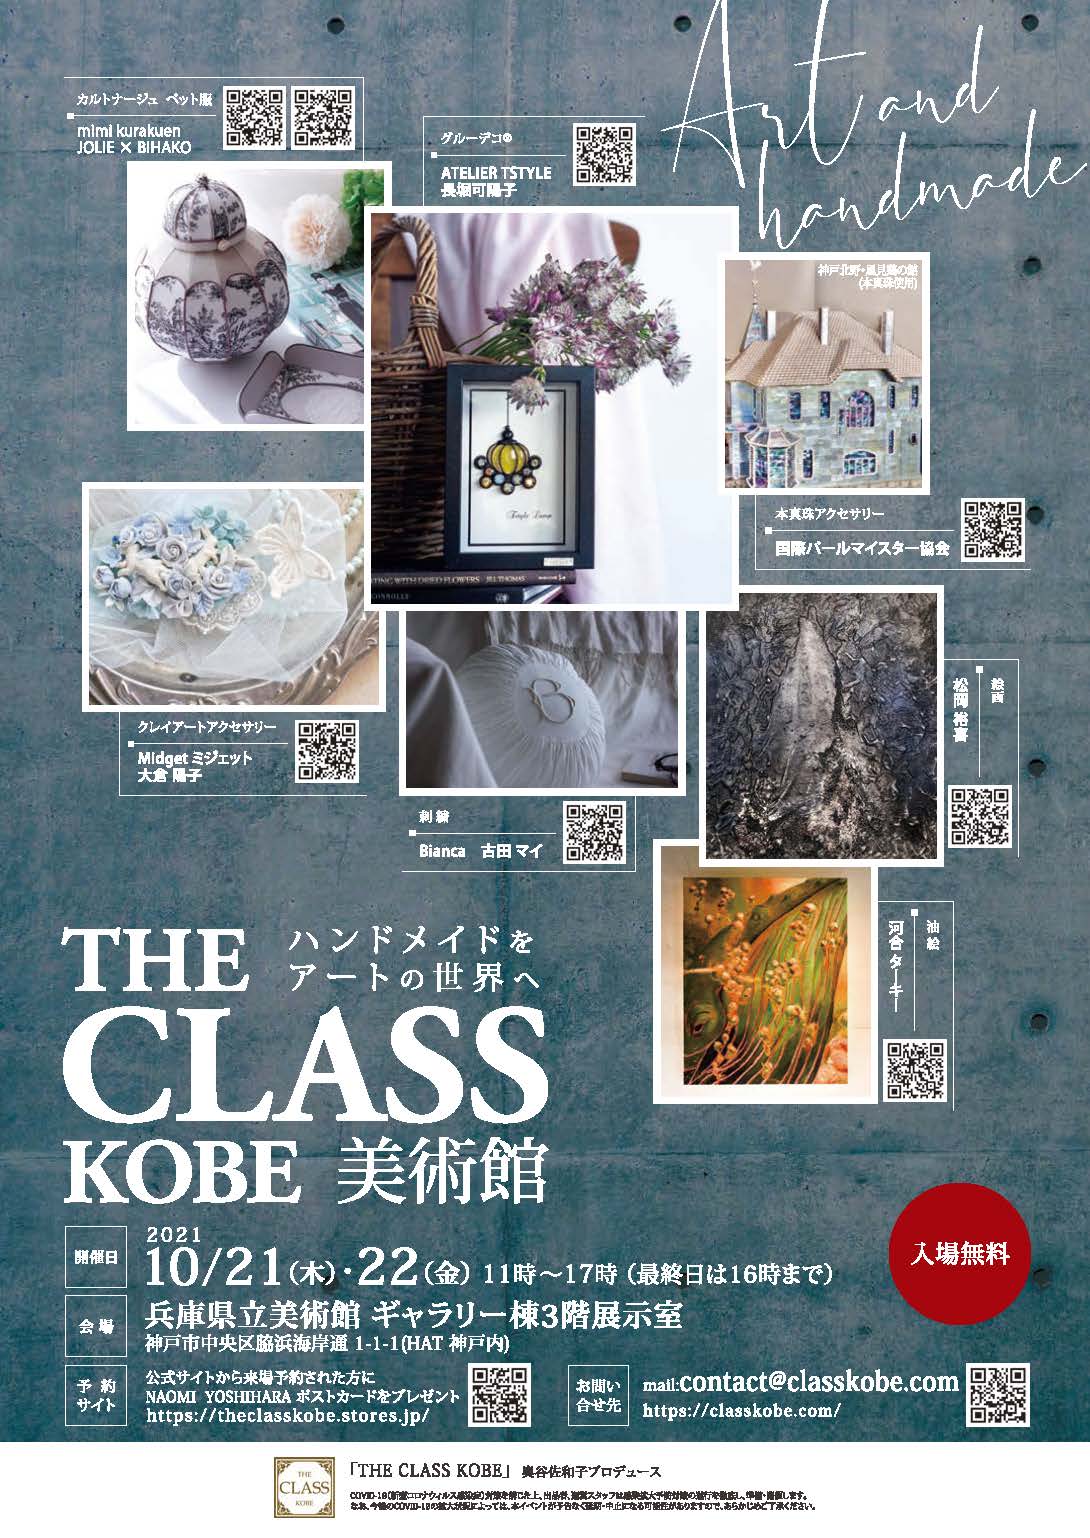 THE CLASS KOBE@居領地